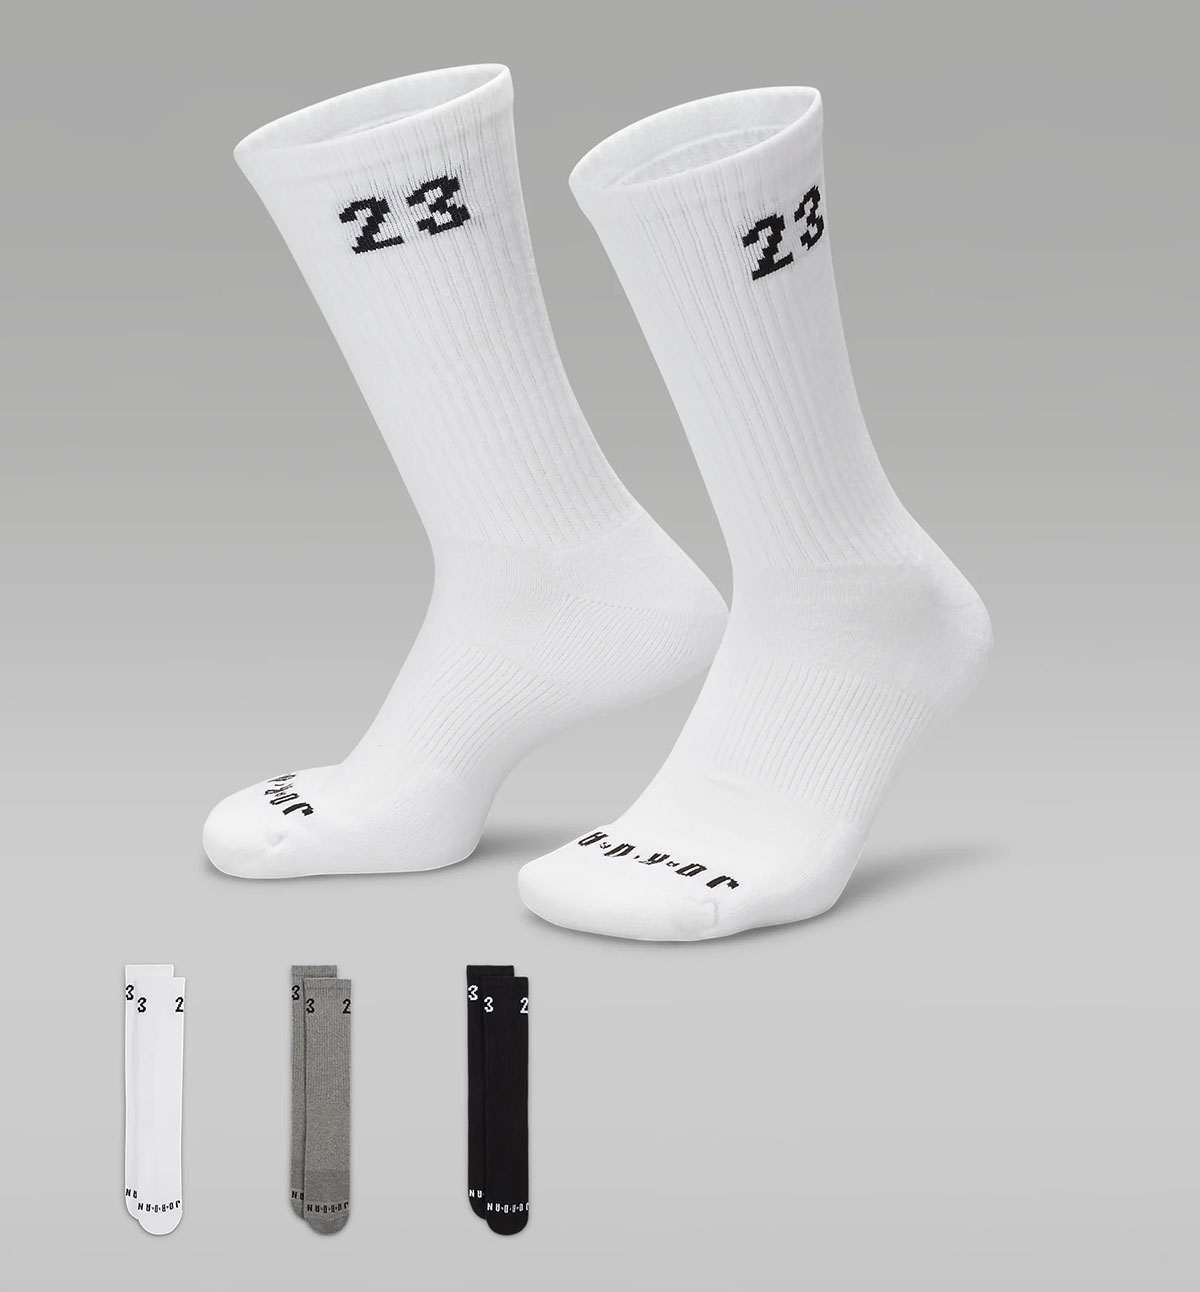 Jordan martin Essentials Crew Socks White Black Grey